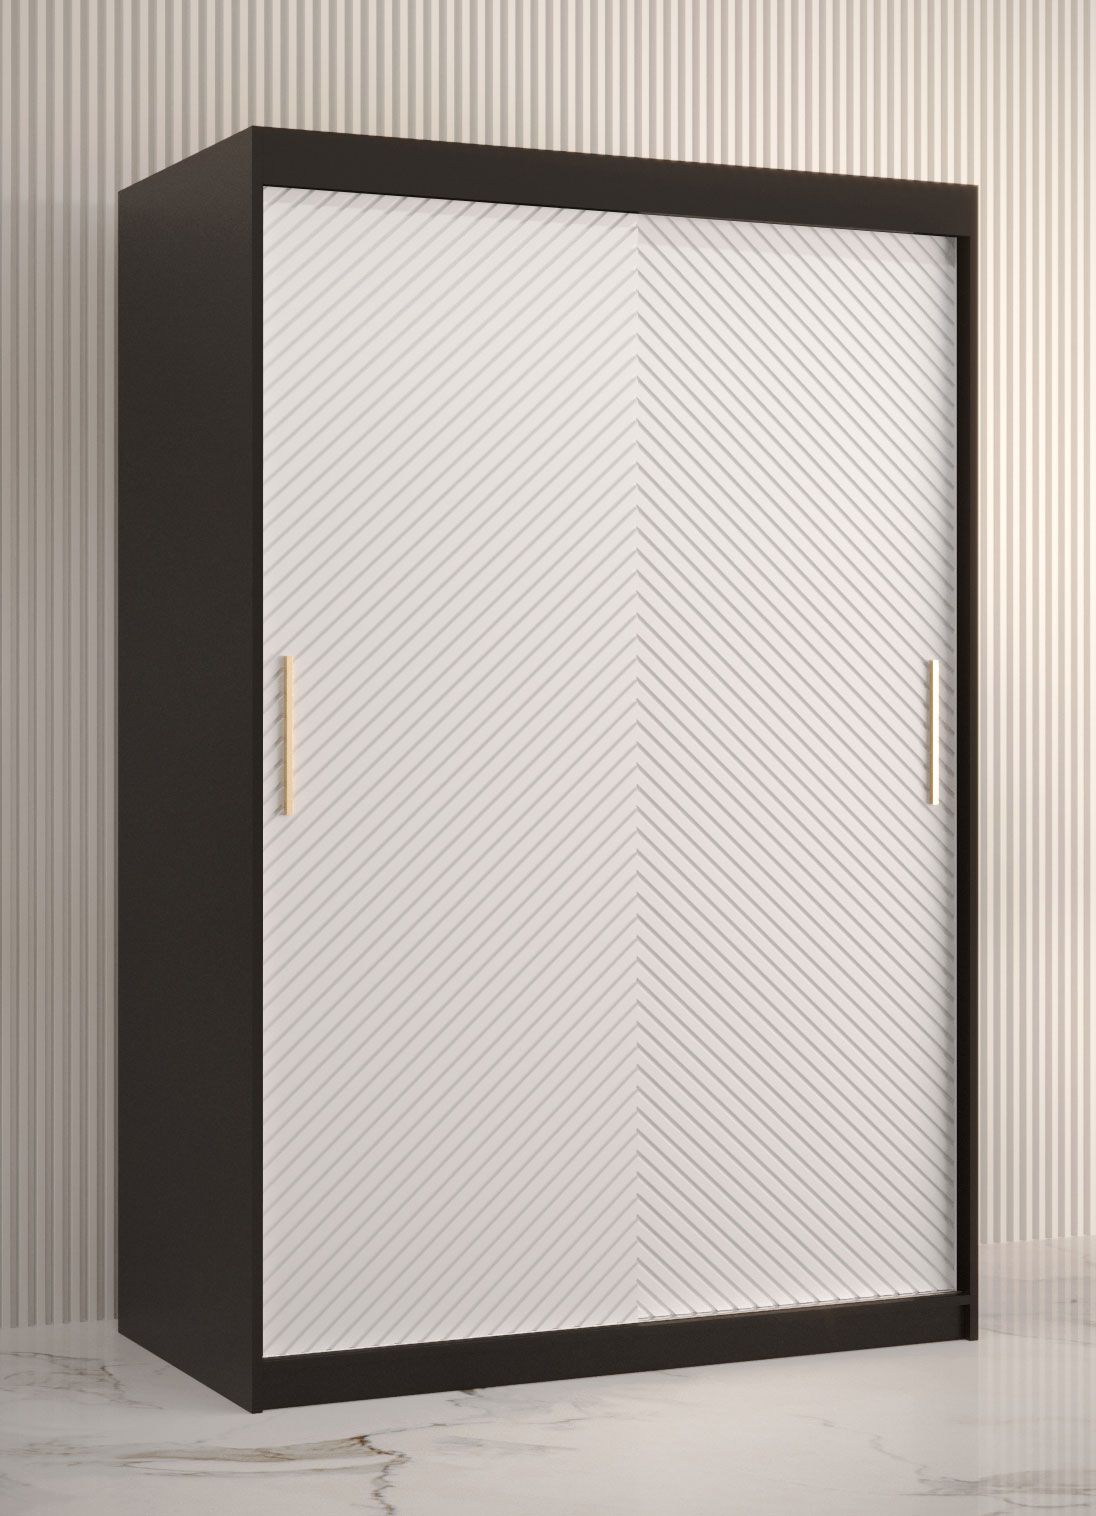 Kledingkast met stijlvol patroon Balmenhorn 07, kleur: mat zwart / mat wit - afmetingen: 200 x 120 x 62 cm (H x B x D), met voldoende opbergruimte